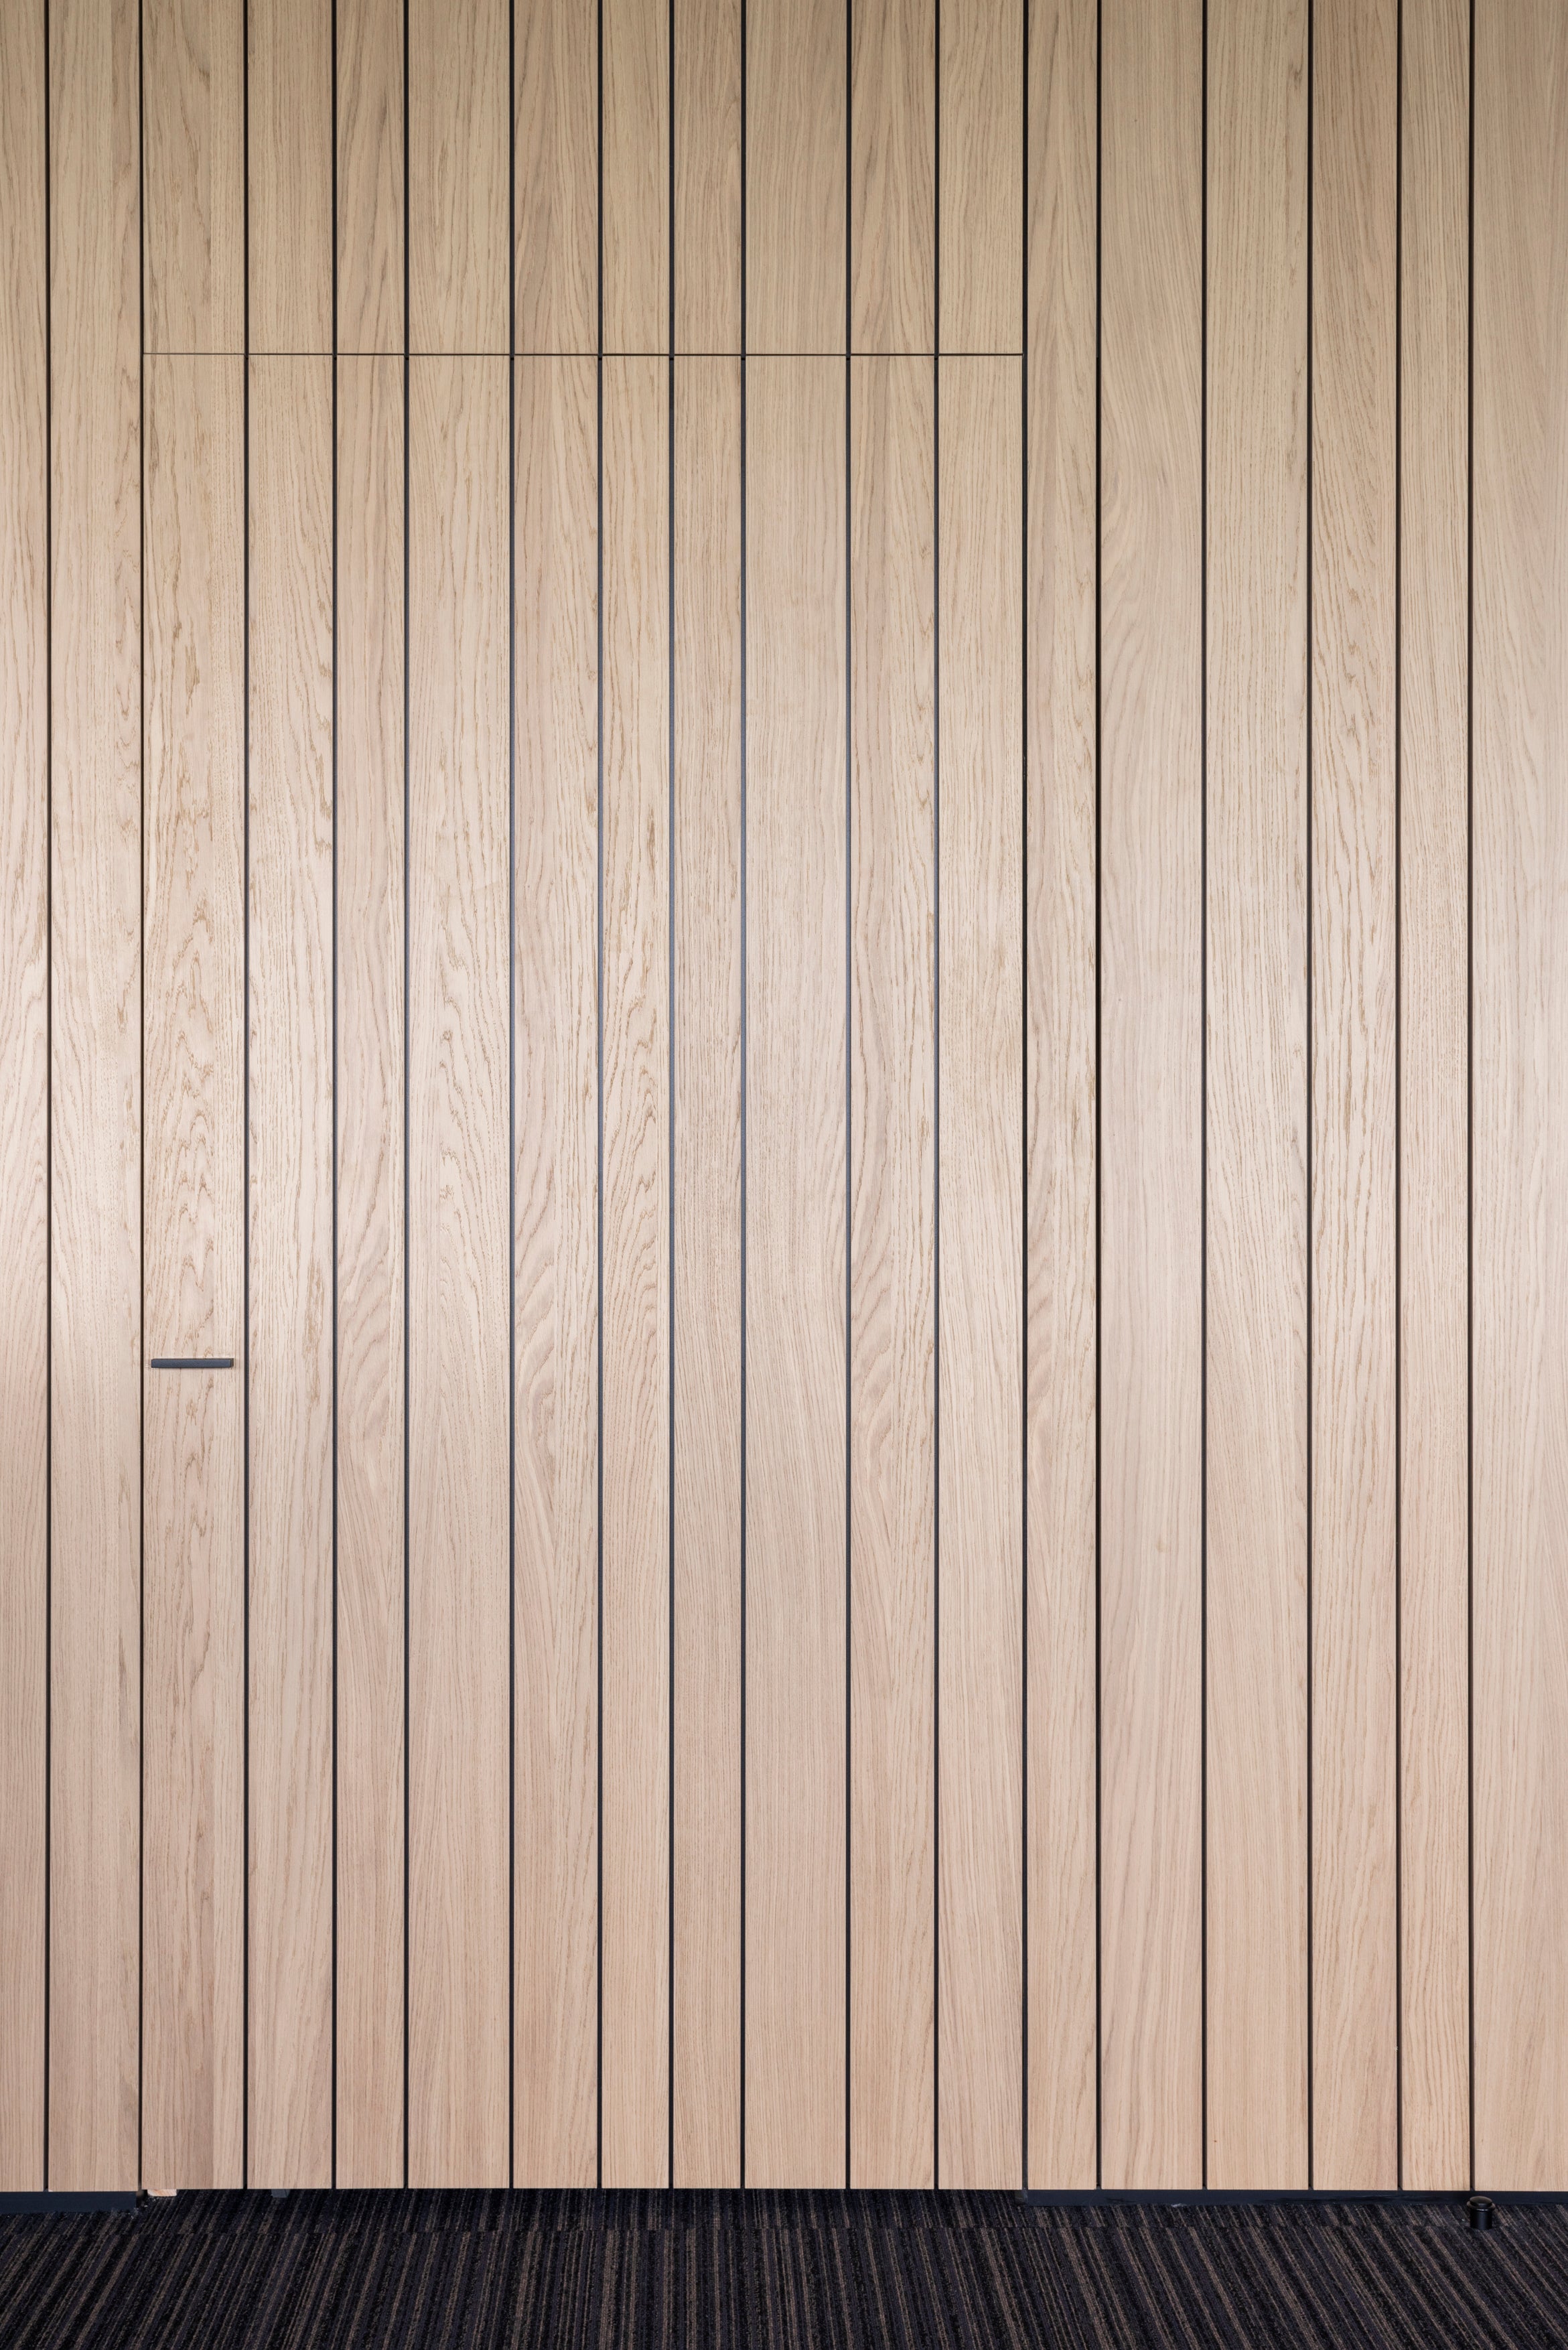 Shinnoki - wood wall - office